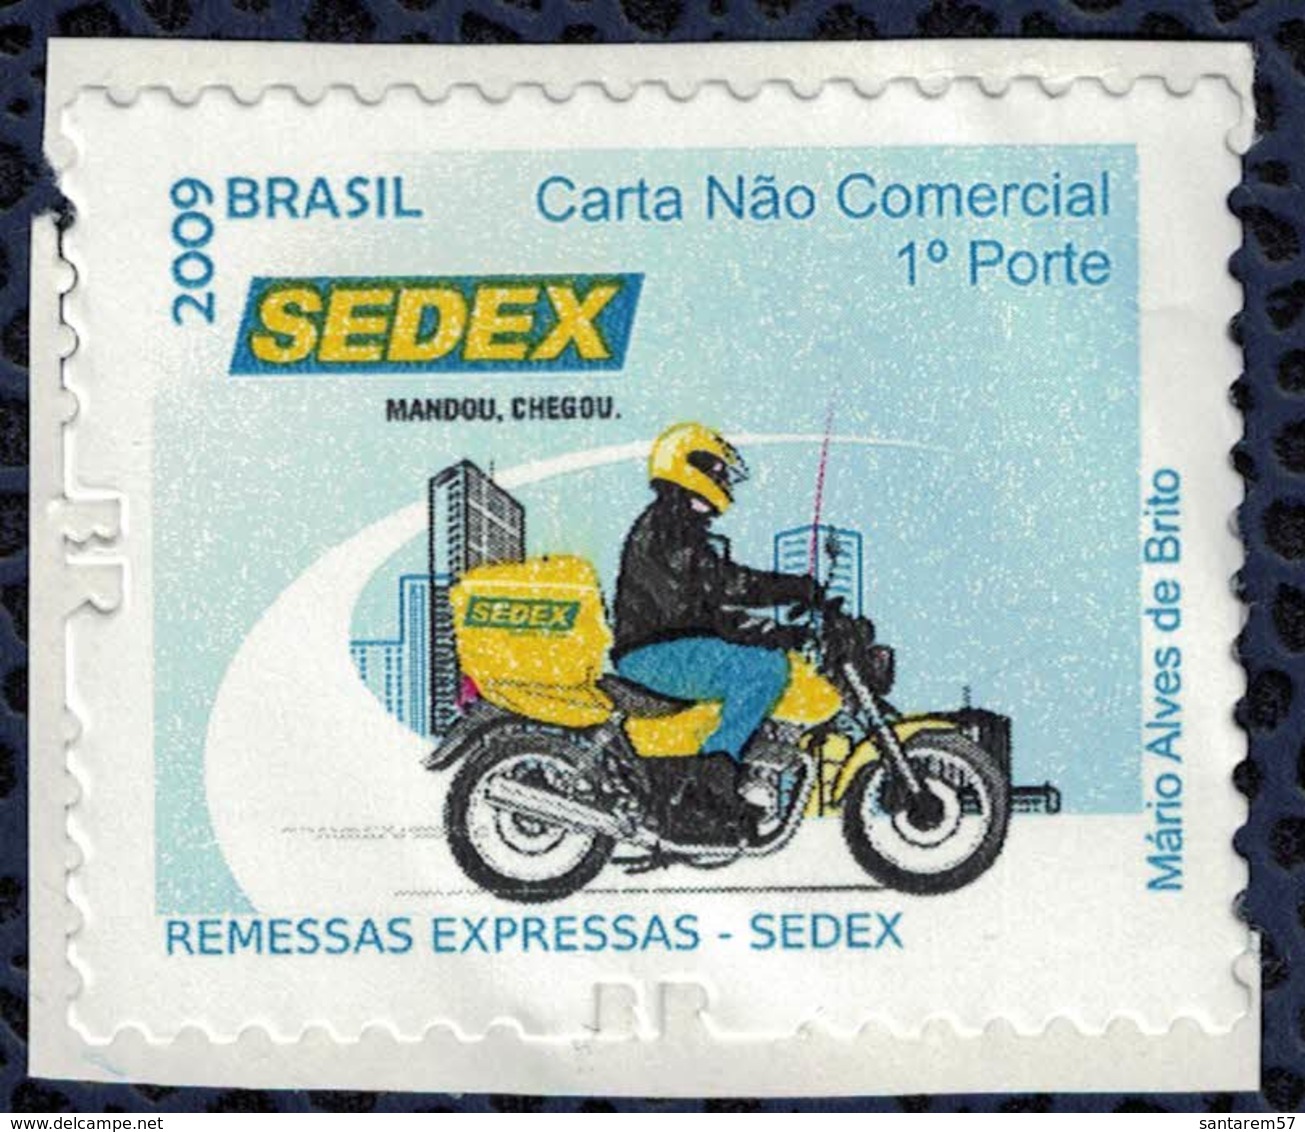 Brésil 2009 Autoadhésif SEDEX Remessas Expressas Express Mail - Neufs